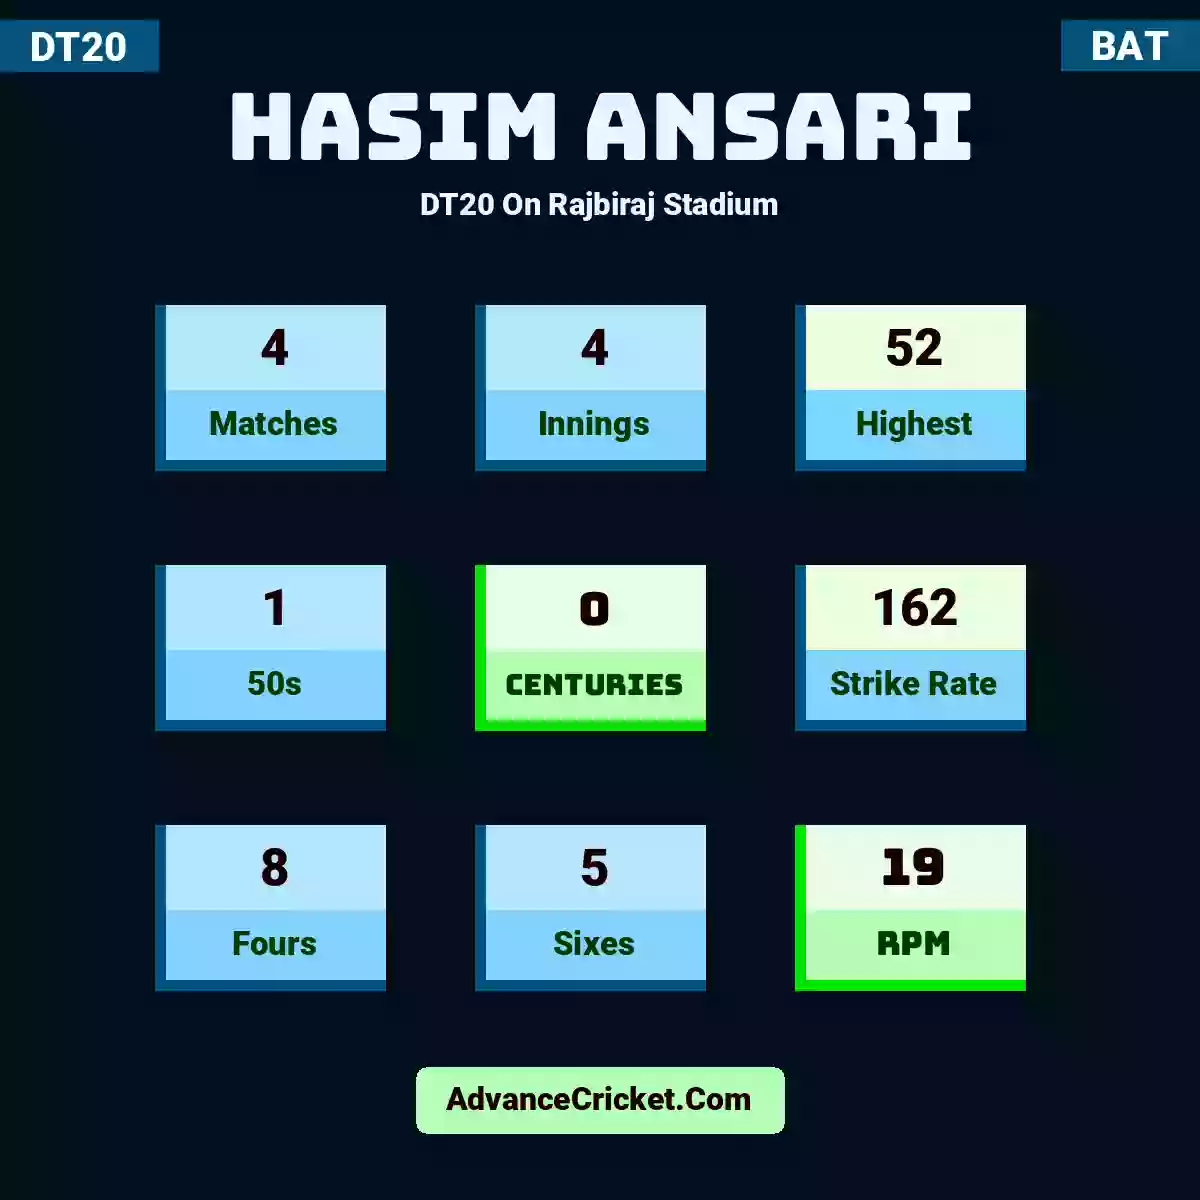 Hasim Ansari DT20  On Rajbiraj Stadium, Hasim Ansari played 4 matches, scored 52 runs as highest, 1 half-centuries, and 0 centuries, with a strike rate of 162. H.Ansari hit 8 fours and 5 sixes, with an RPM of 19.